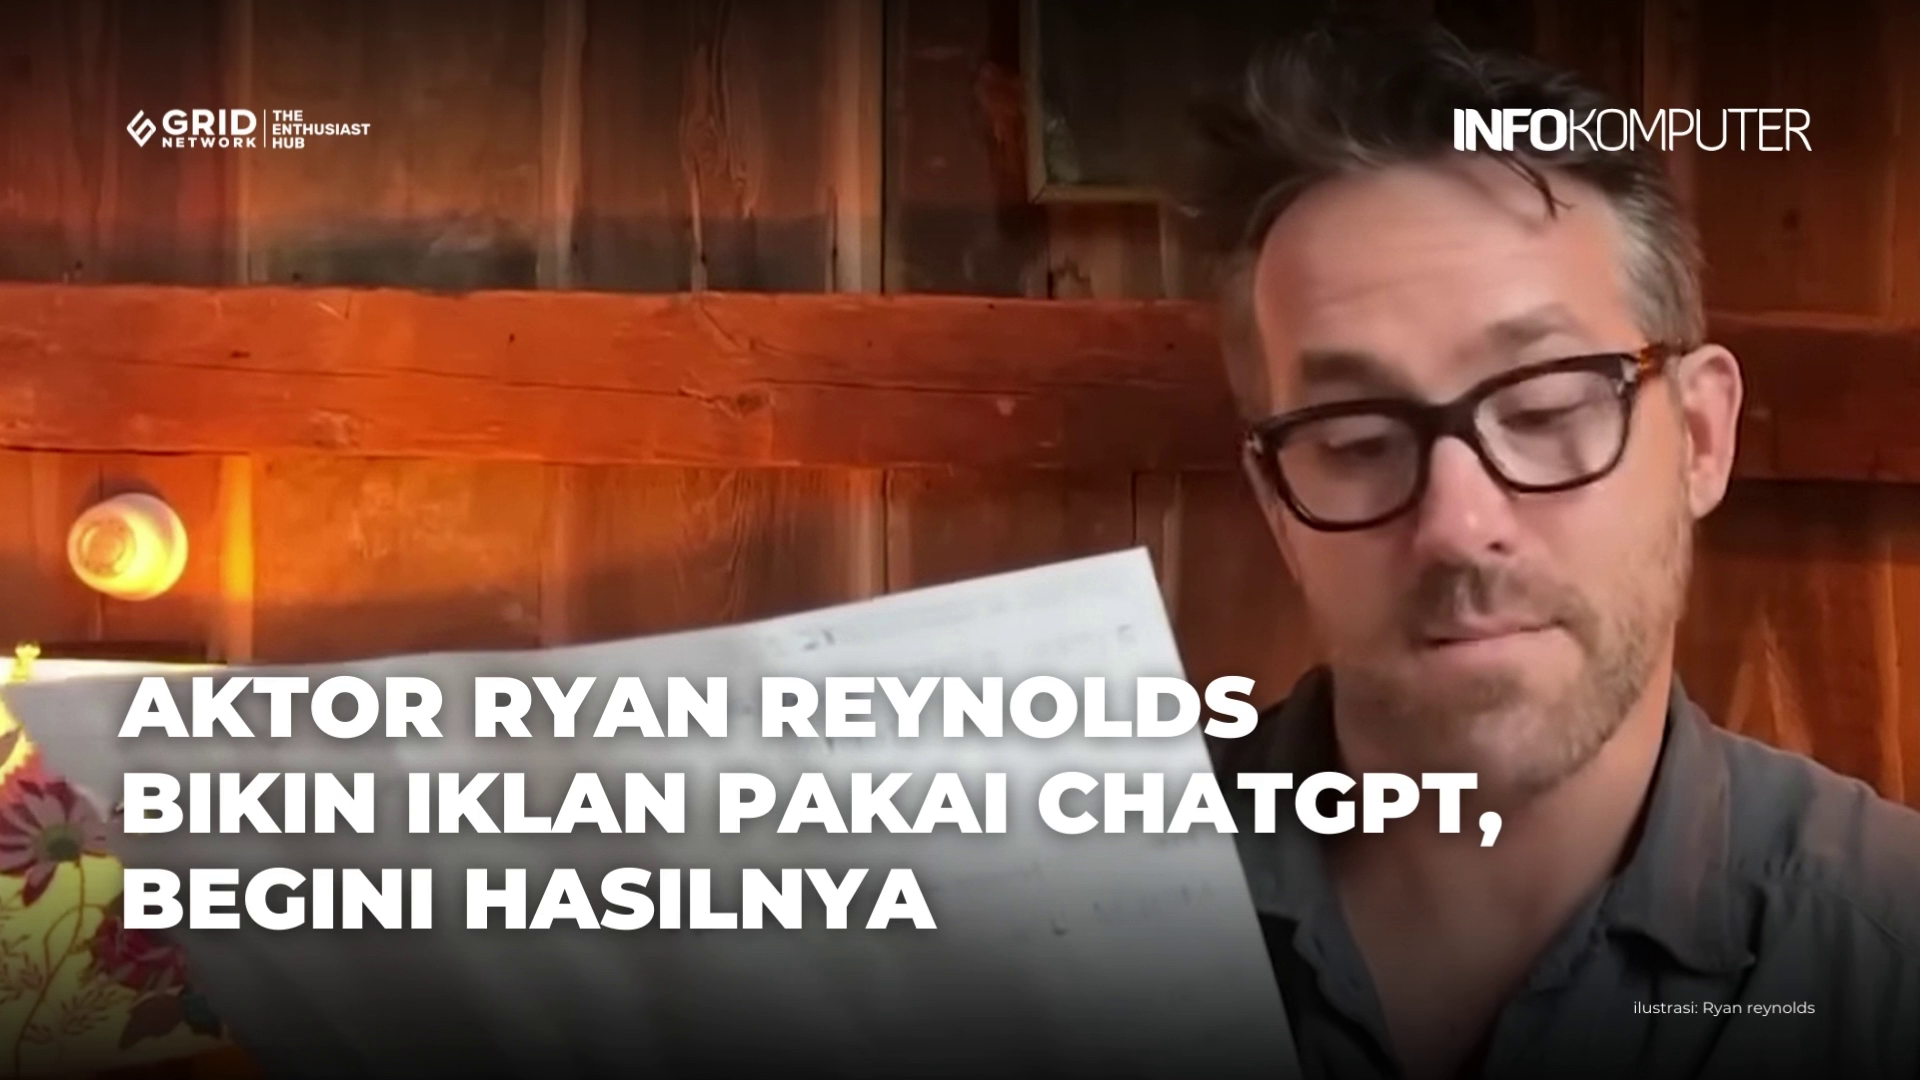 Pemain Film 'Deadpool' Ryan Reynolds Bikin Iklan Pakai ChatGPT | Berita Teknologi